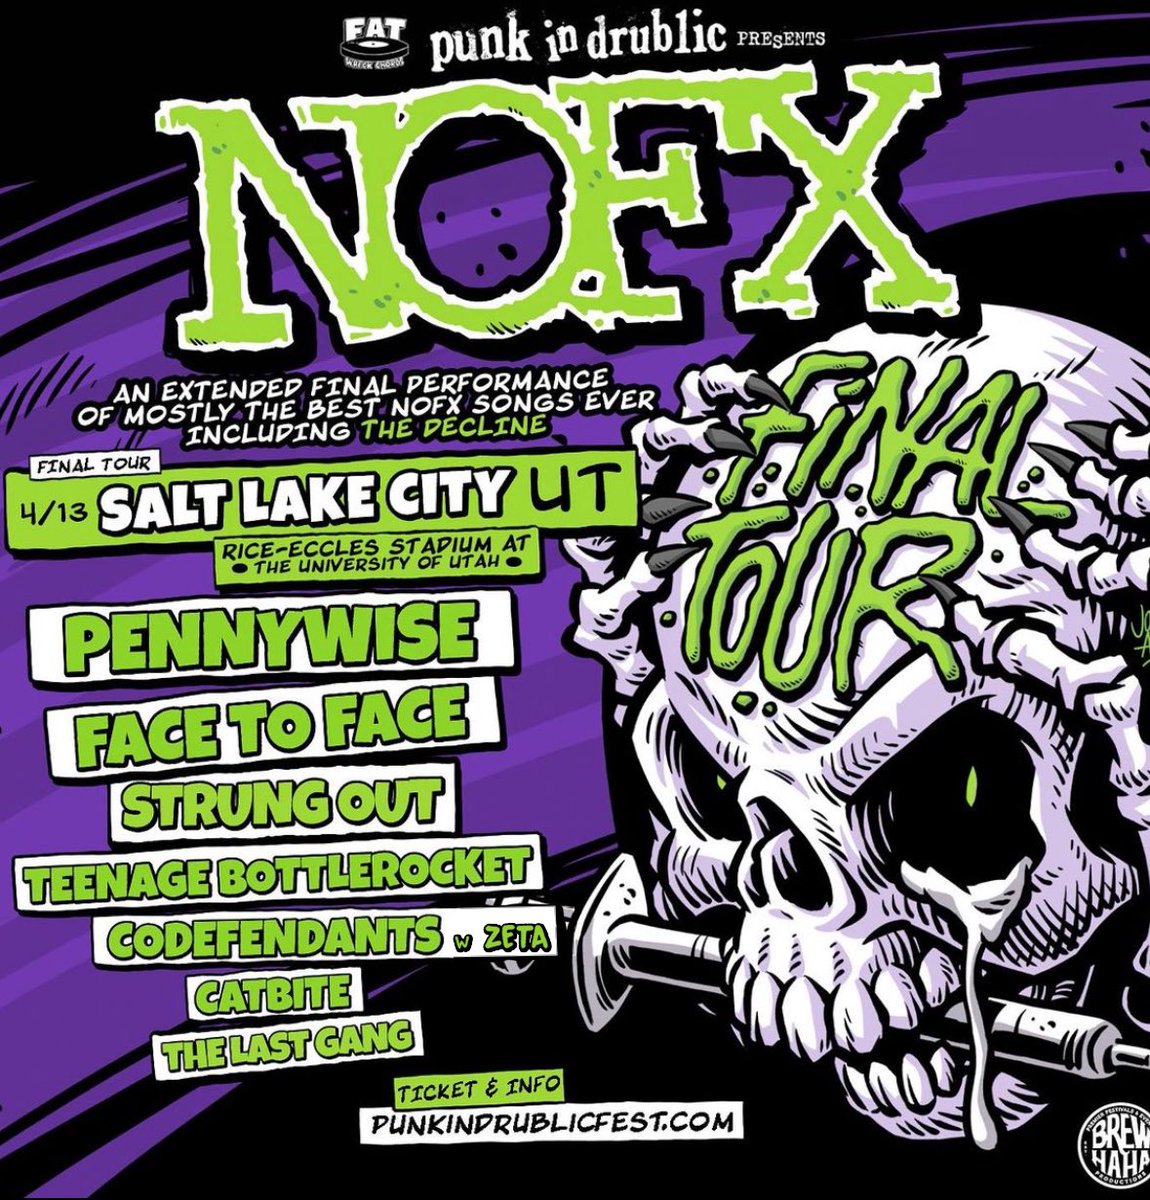 Next weekend Zeta backing Codefendants again at the Punk in Drublic in Salt Lake City, UT for the NOFX final tour 🔥 round 2 LFG 🤘🏽 #joinzeta #codefendants #nofx #punkindrublic